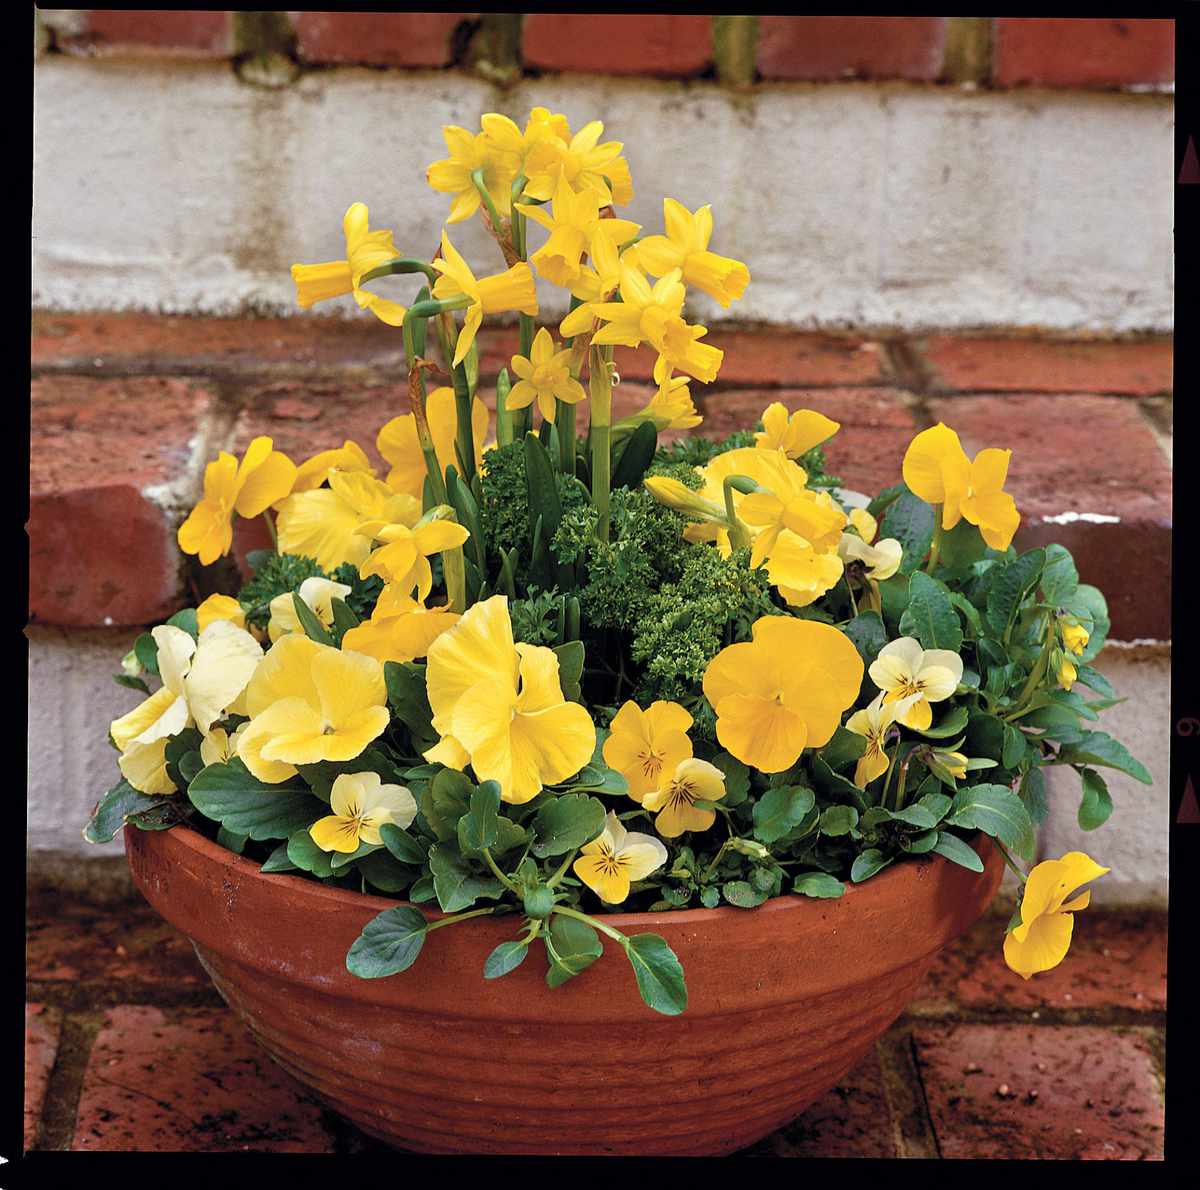 Daffodils, Pansies & Violas